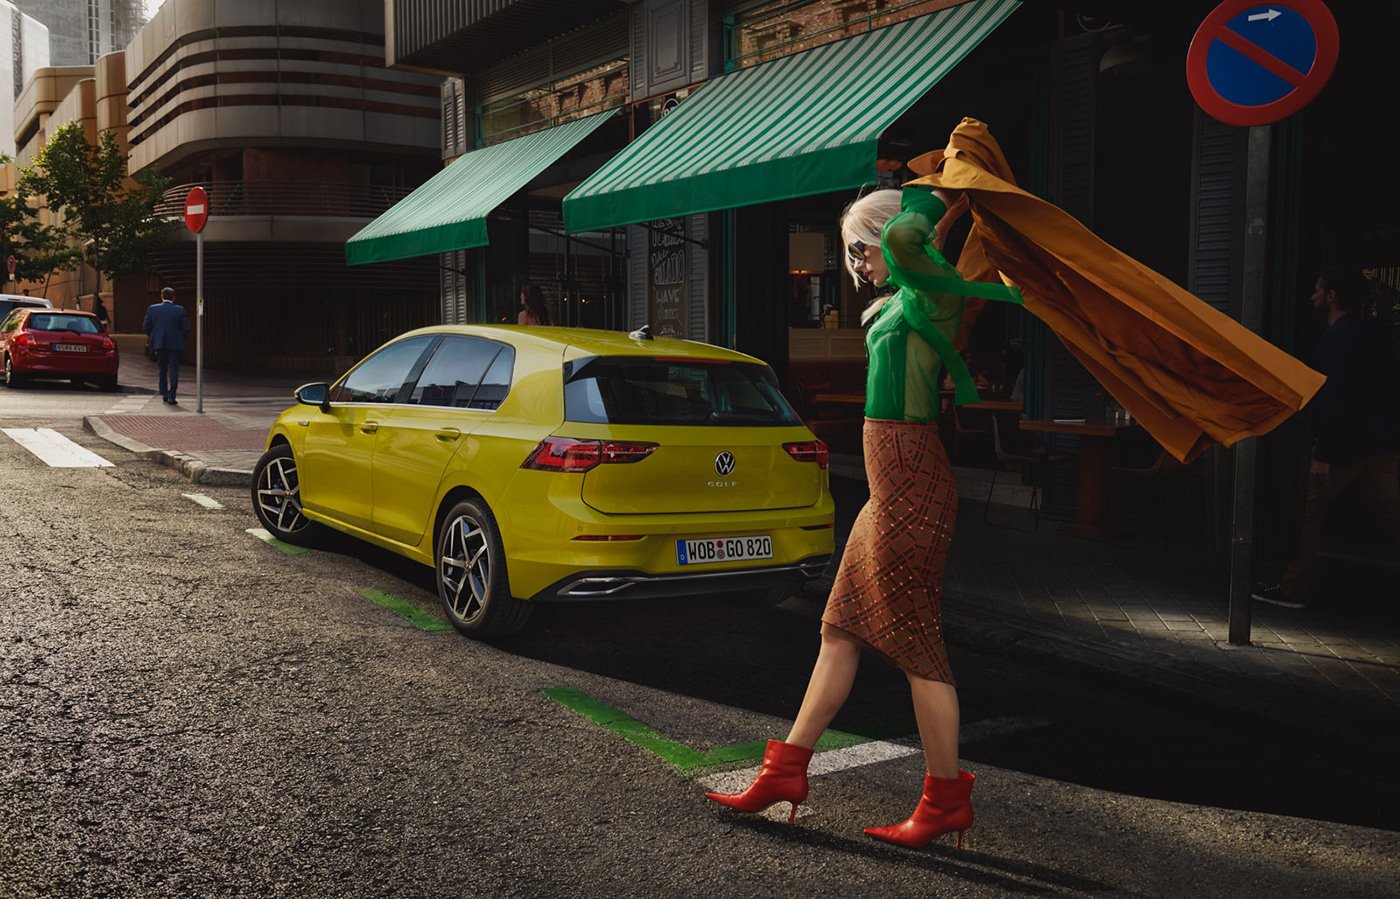 volkswagen VW golf golf 8 kai uwe gindlach ddb berlin Advertising  automotive  